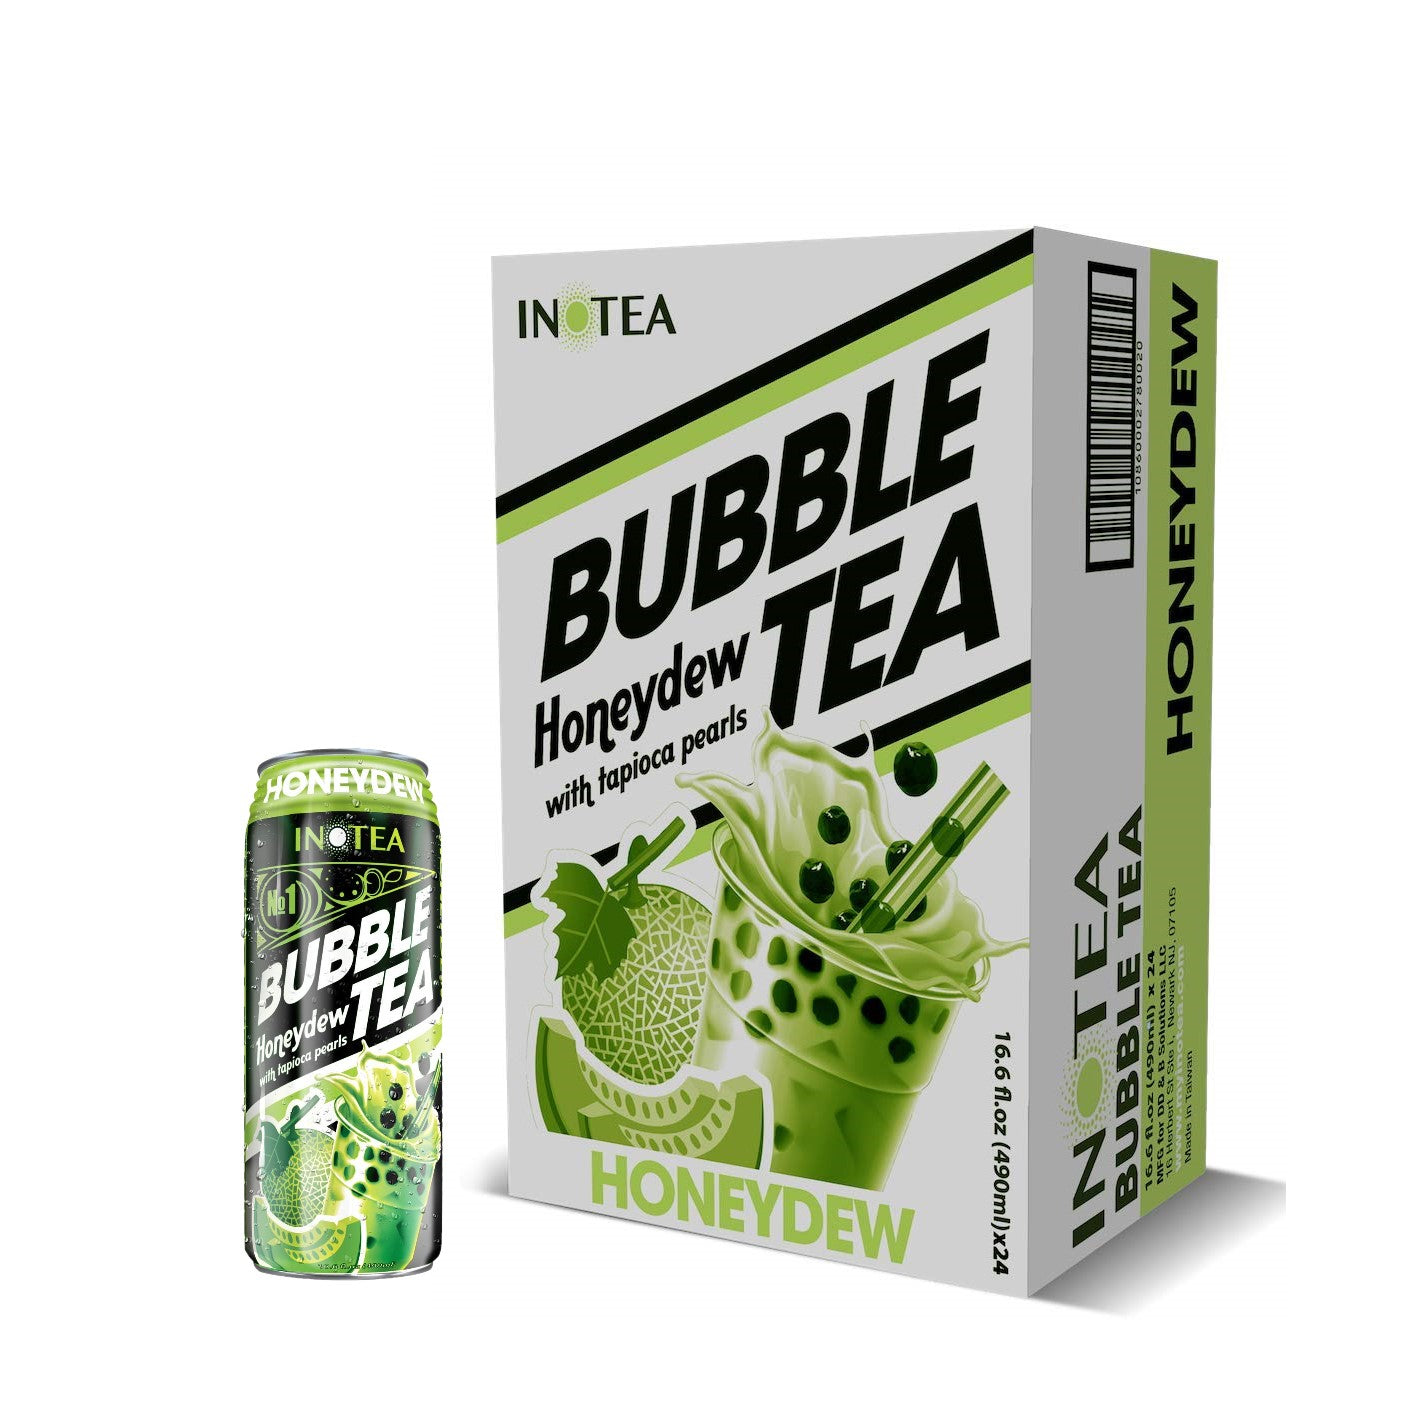 INOTEA Bubble Tea Honeydew ( 490ml x 1, x 24 ) - COKOYAM